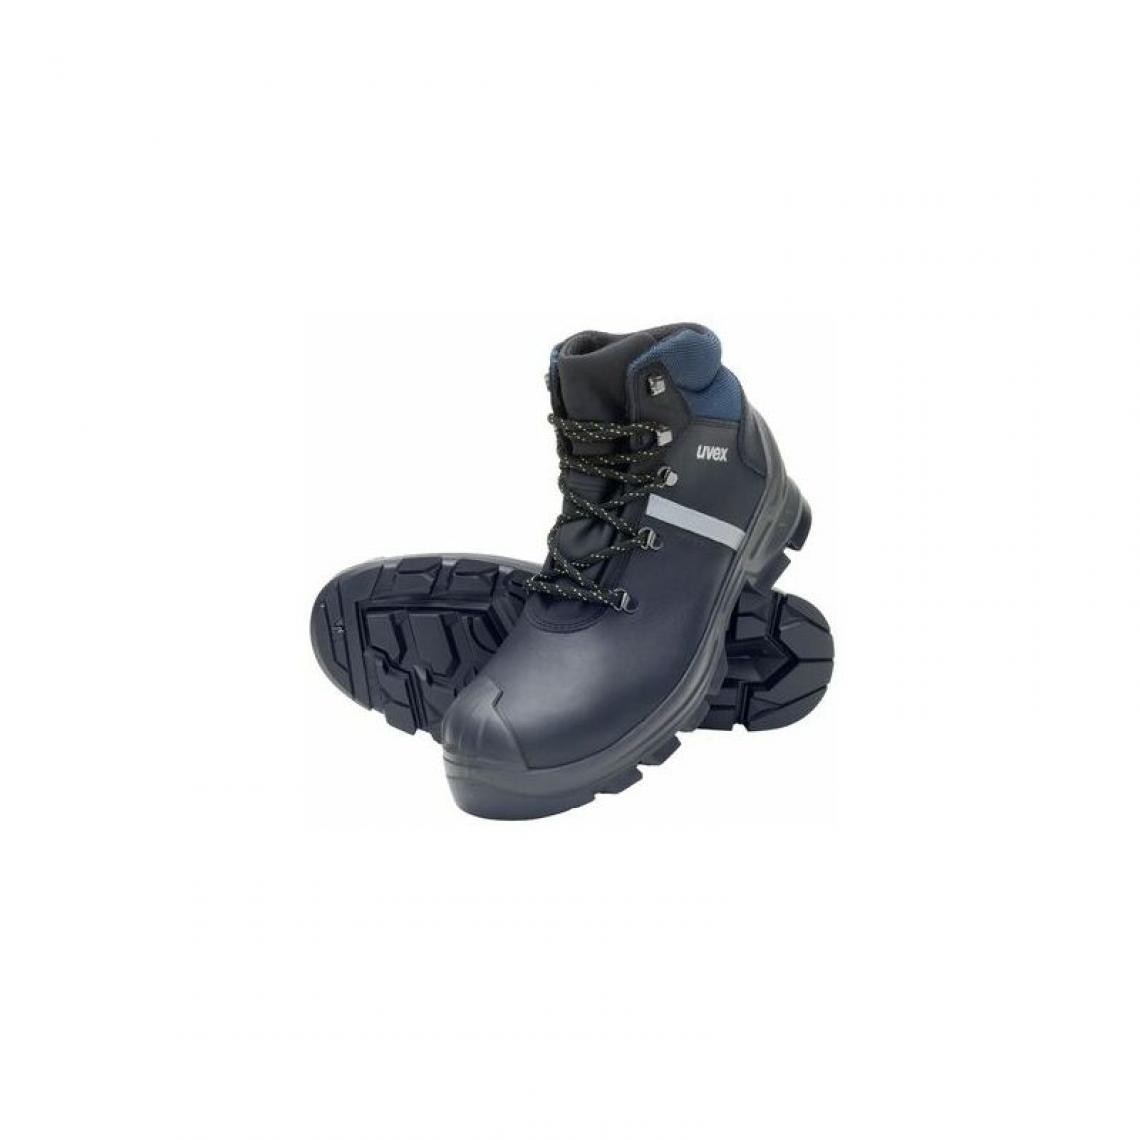 Uvex - uvex 2 Chaussures montantes construction S3, pointure 42 () - Equipement de Protection Individuelle